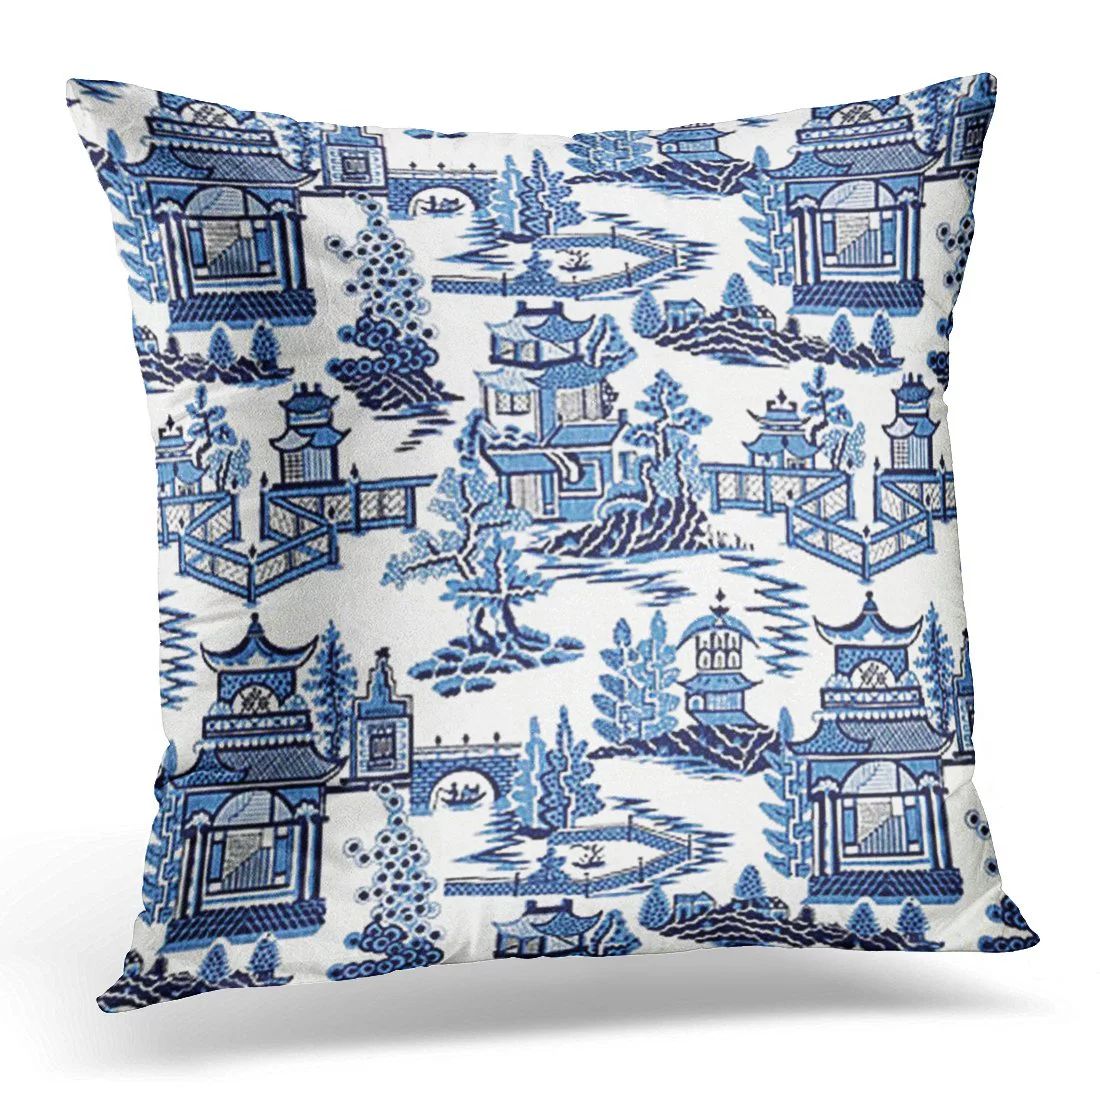 STOAG Oriental Blue and White Cultural Throw Pillowcase Cushion Case Cover 16x16 inch | Walmart (US)